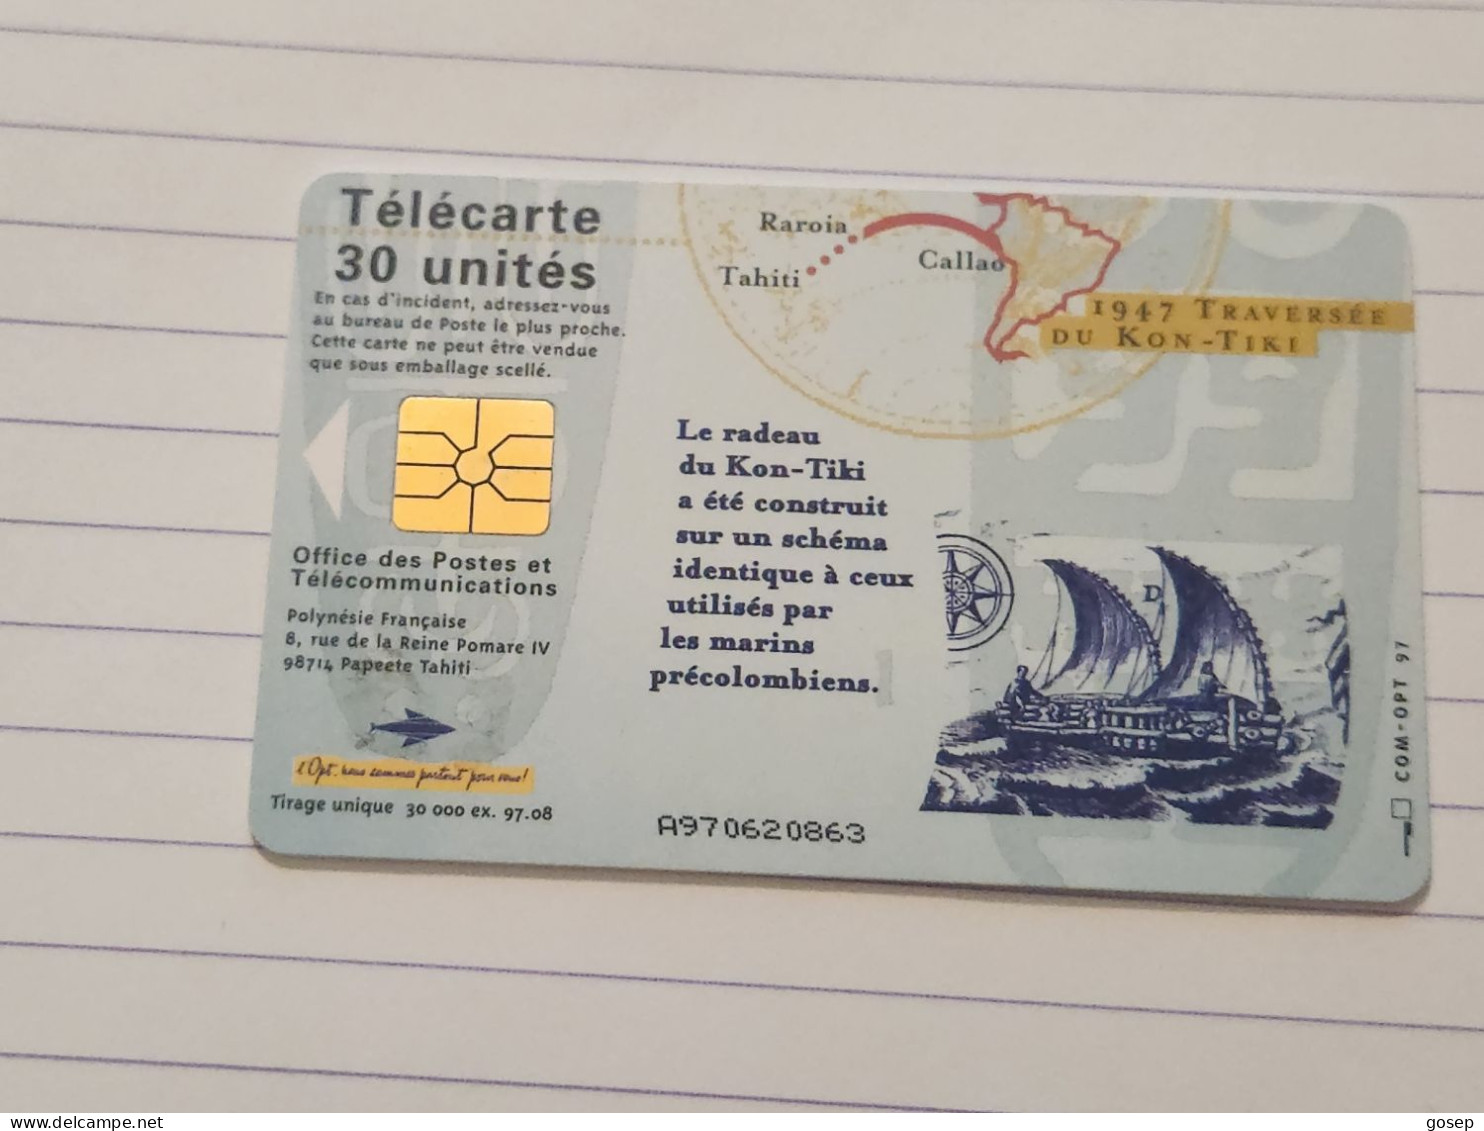 French Polynesia-(FP-060)-OKON-TIKI-(21)(A970620863)-(30units)-(tirage-30.000)-used Card+1card Prepiad Free - Polynésie Française